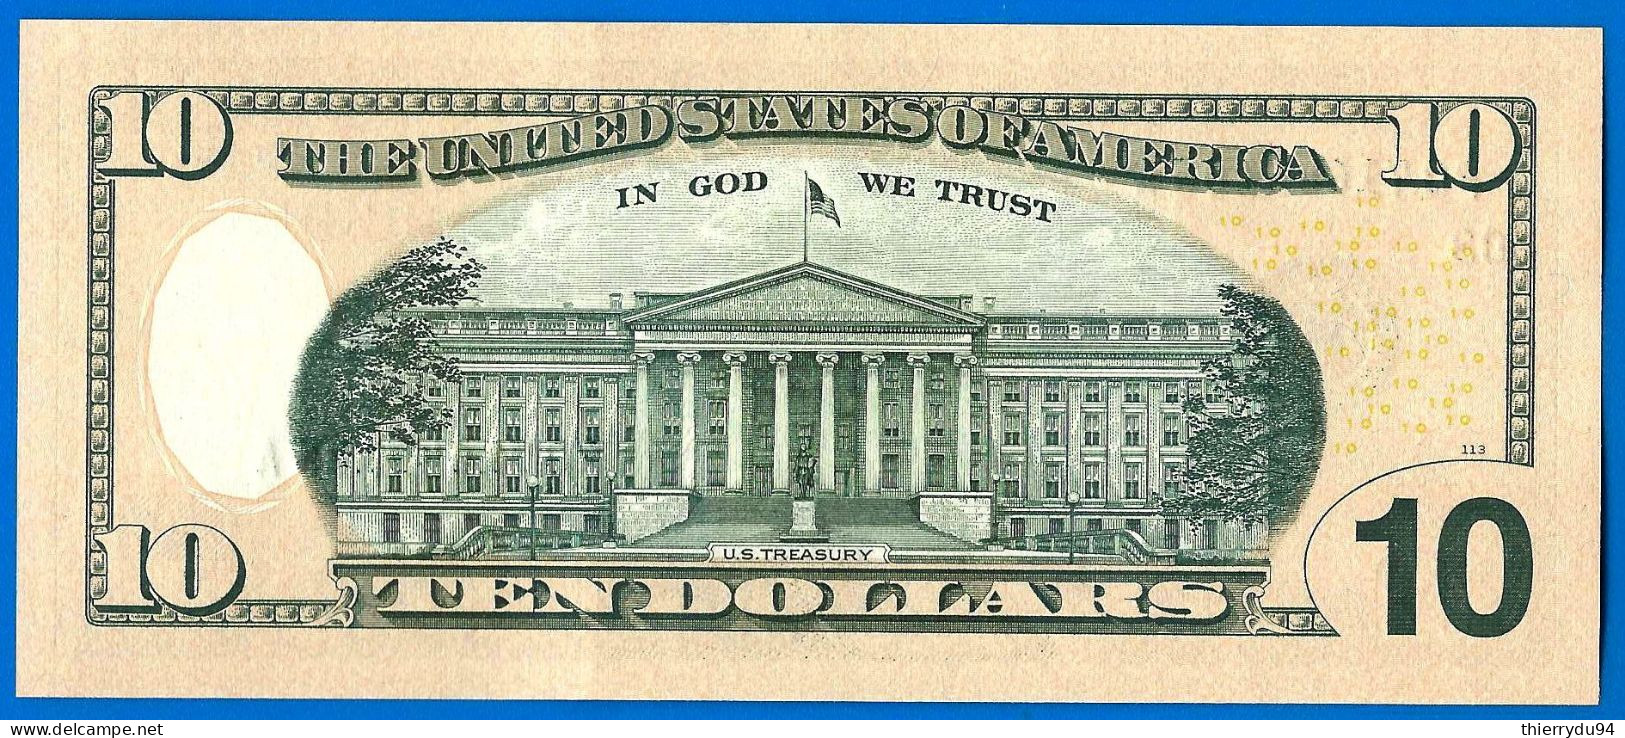 USA 10 Dollars 2017 A Neuf UNC Mint Philadelphia C3 Suffixe A Etats Unis United States Dollar Paypal Bitcoin - Billets Des États-Unis (1862-1923)